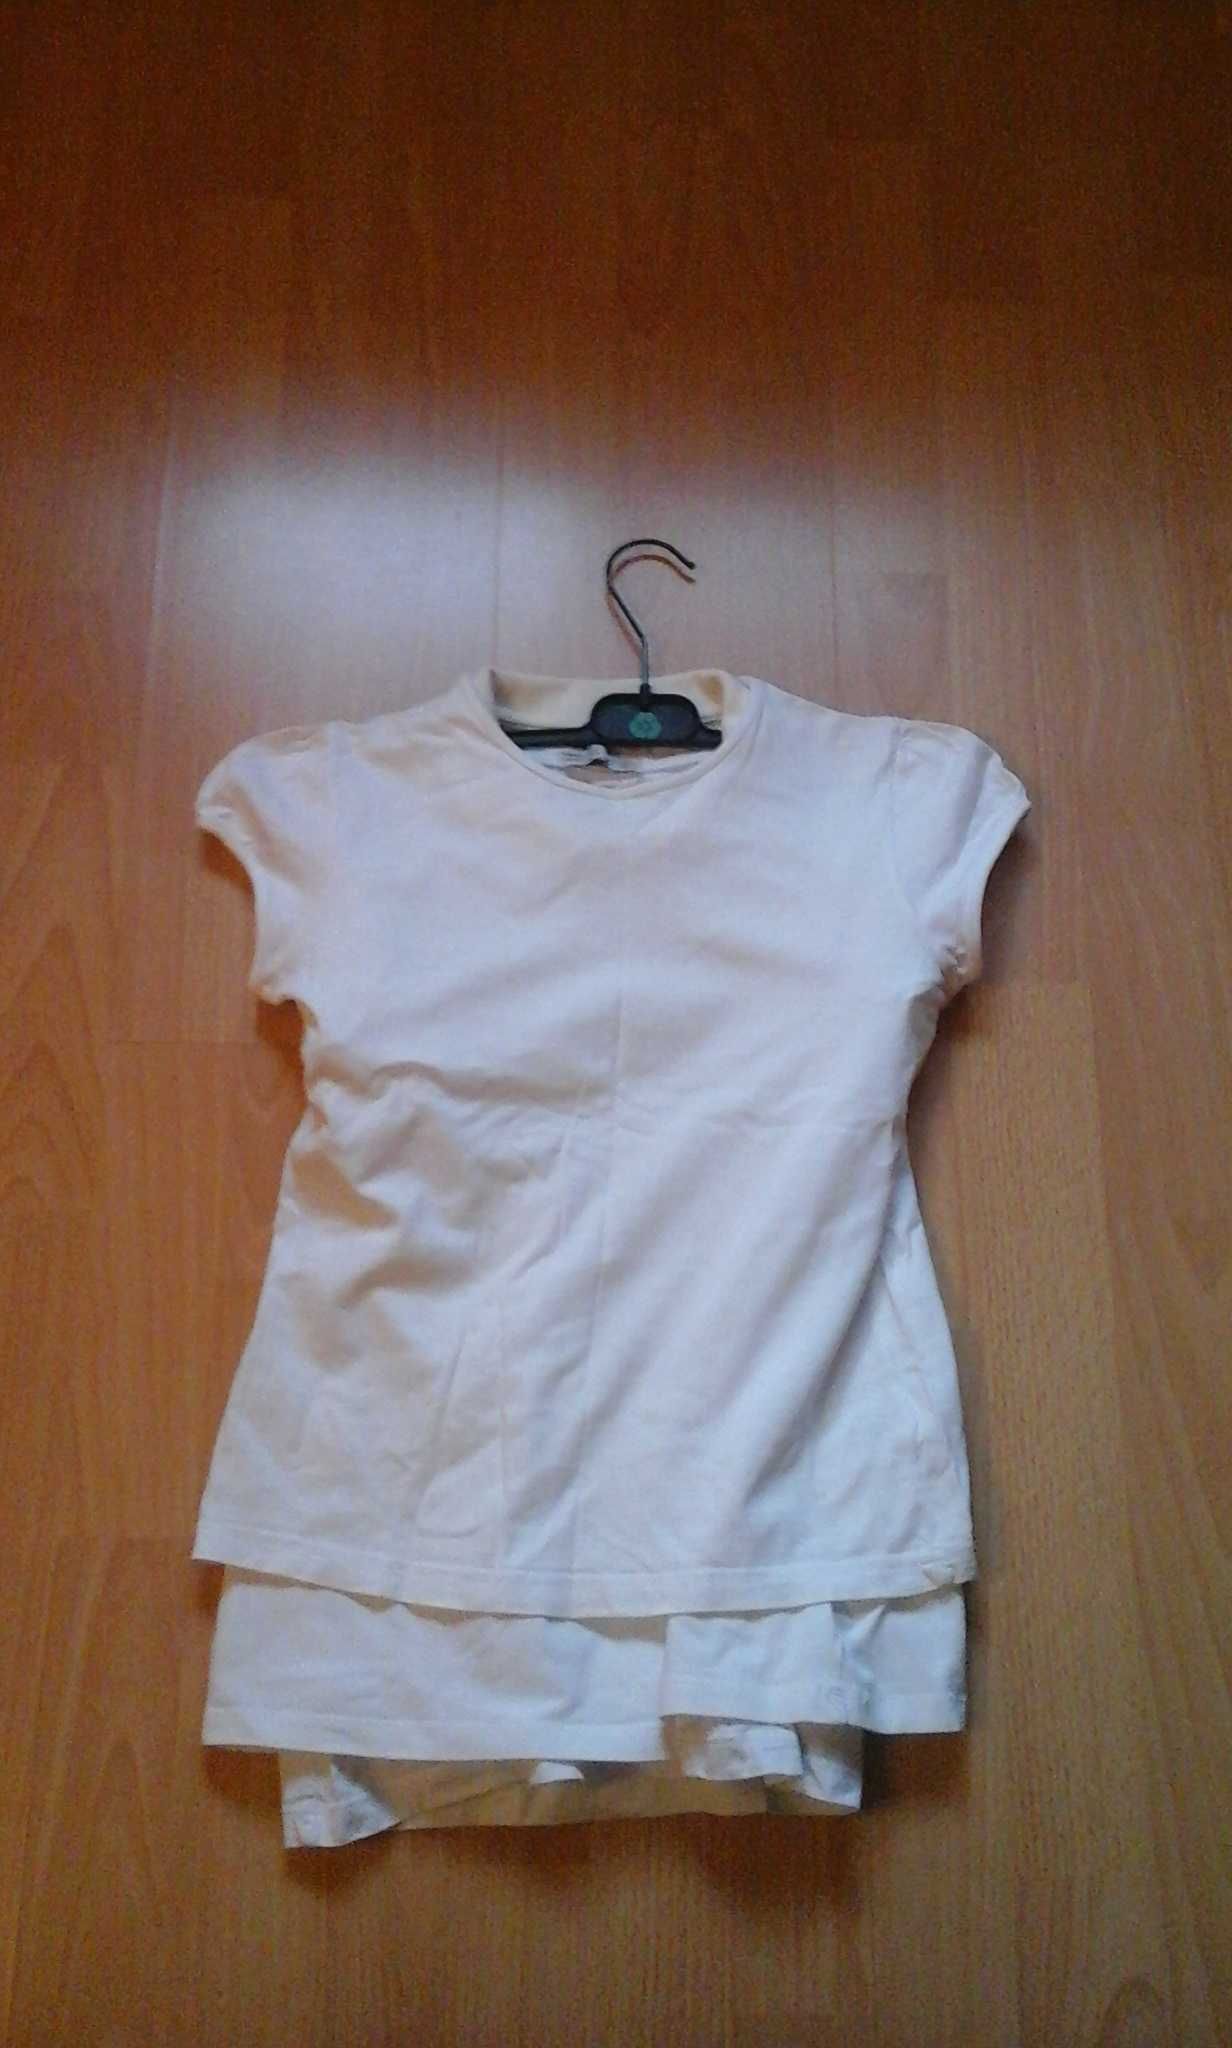 продам белые рубашки на девочку 125-146 см